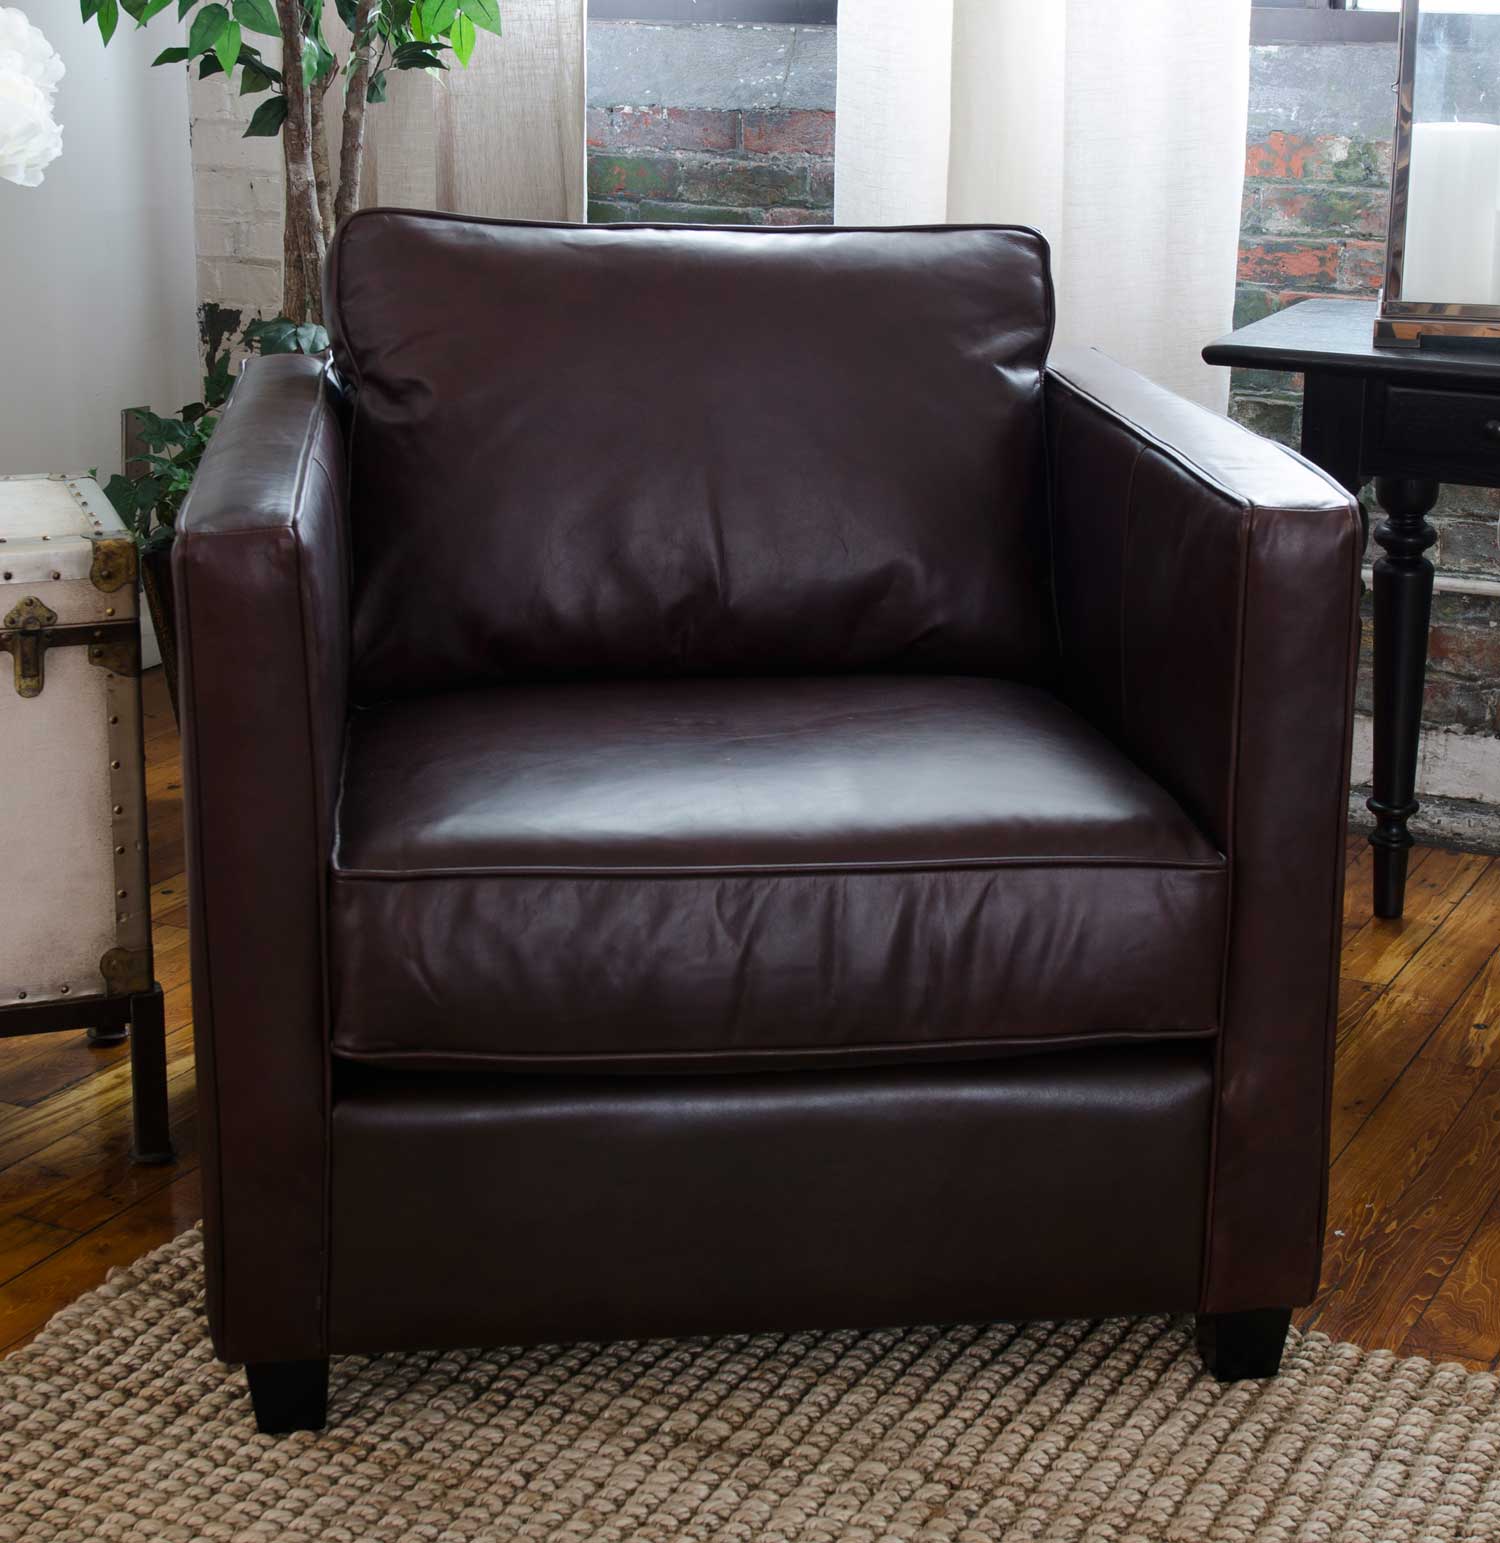 ELEMENTS Fine Home Furnishings Urban Top Grain Leather Standard Chair - Cappuccino